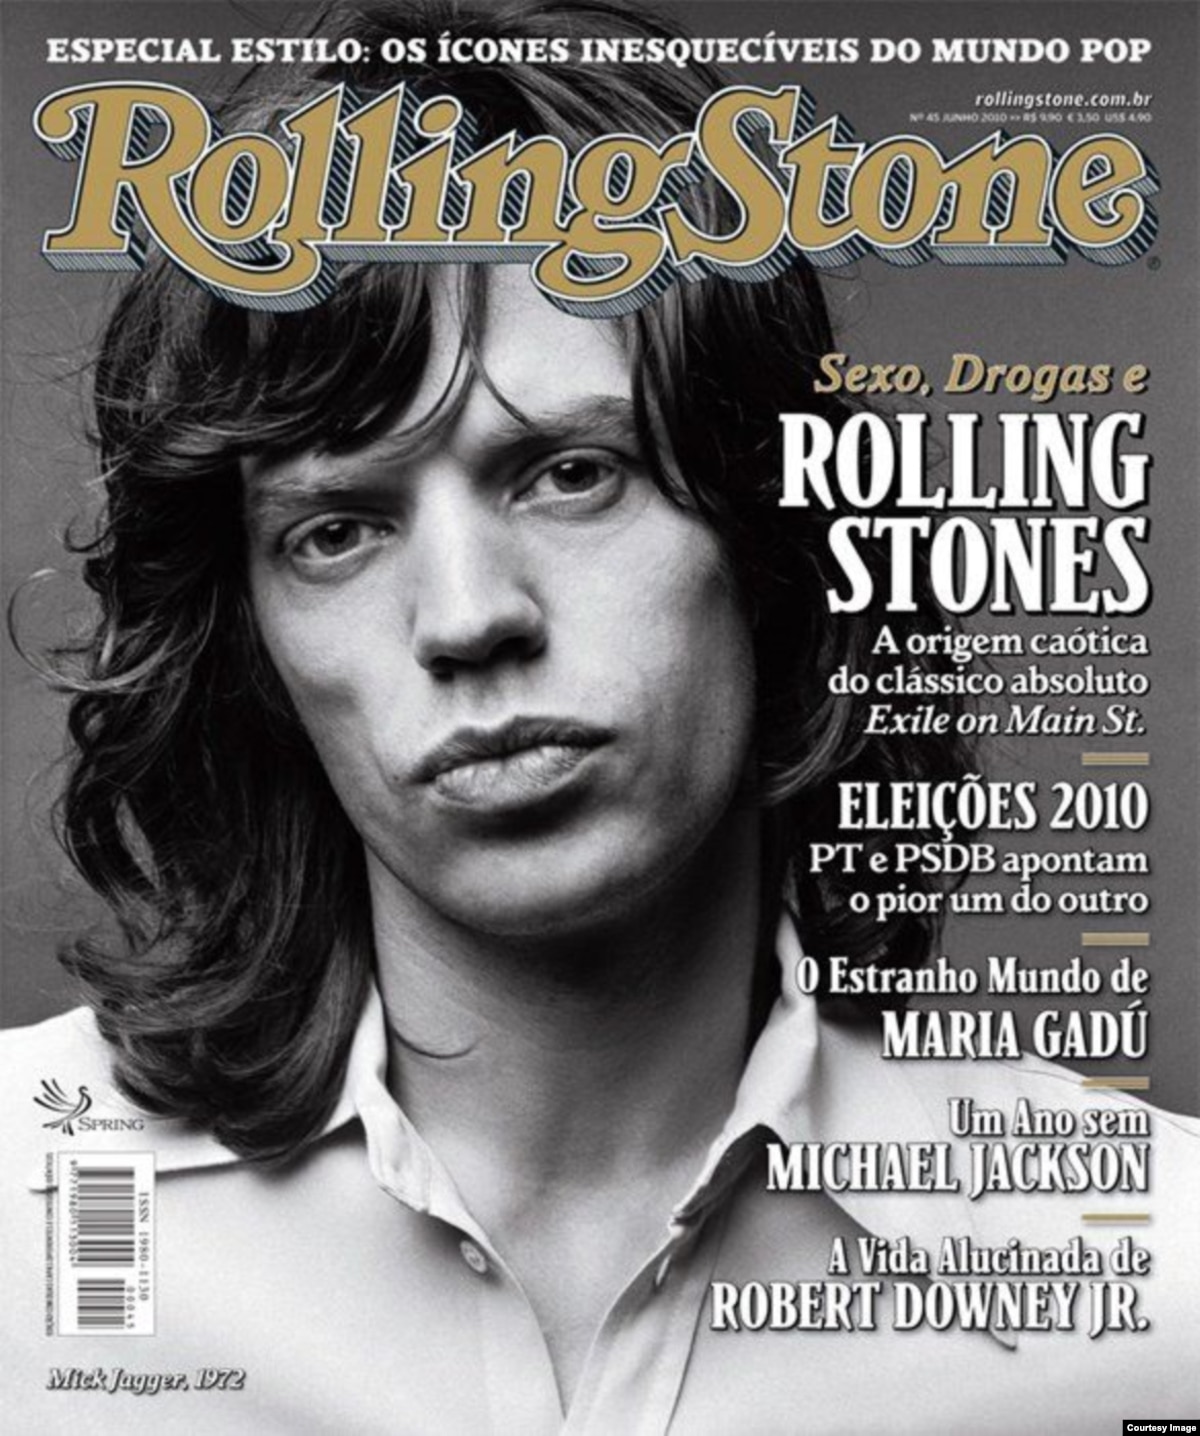 Vk magazines. Обложки журнала Rolling Stone. Обложка журнала Роллинг стоунз. Мик Джаггер на обложке Rolling Stone. Rolling Stone (Magazine) обложки.